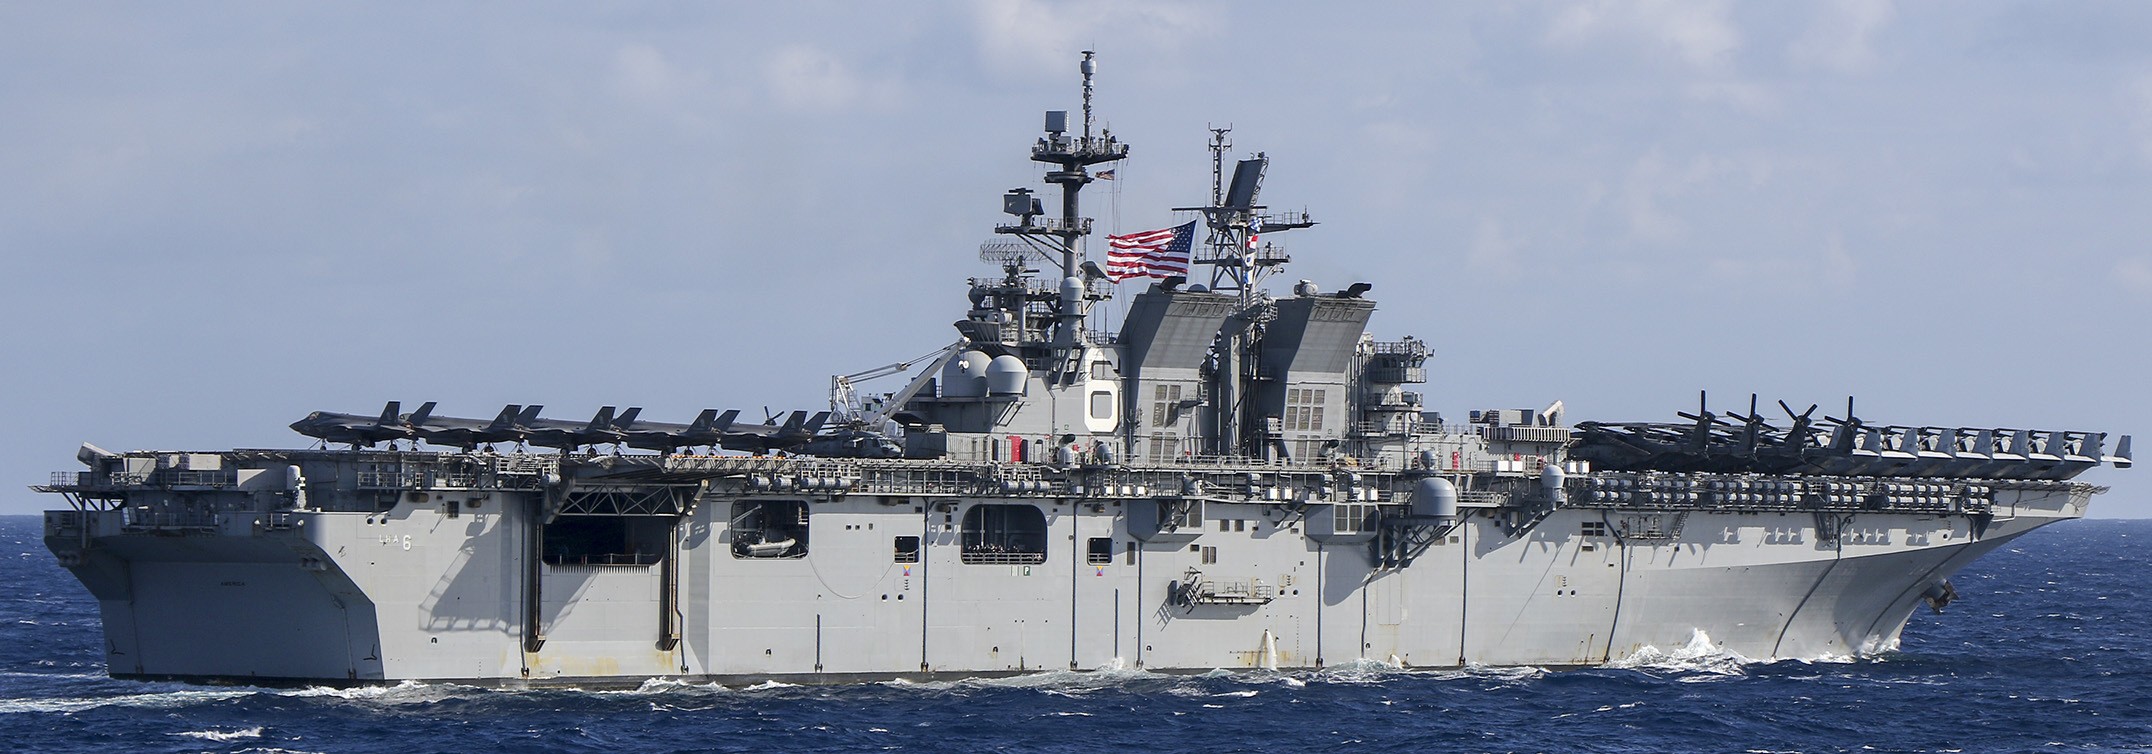 lha-6 uss america amphibious assault ship landing us navy marines vmm-265 philippine sea 201